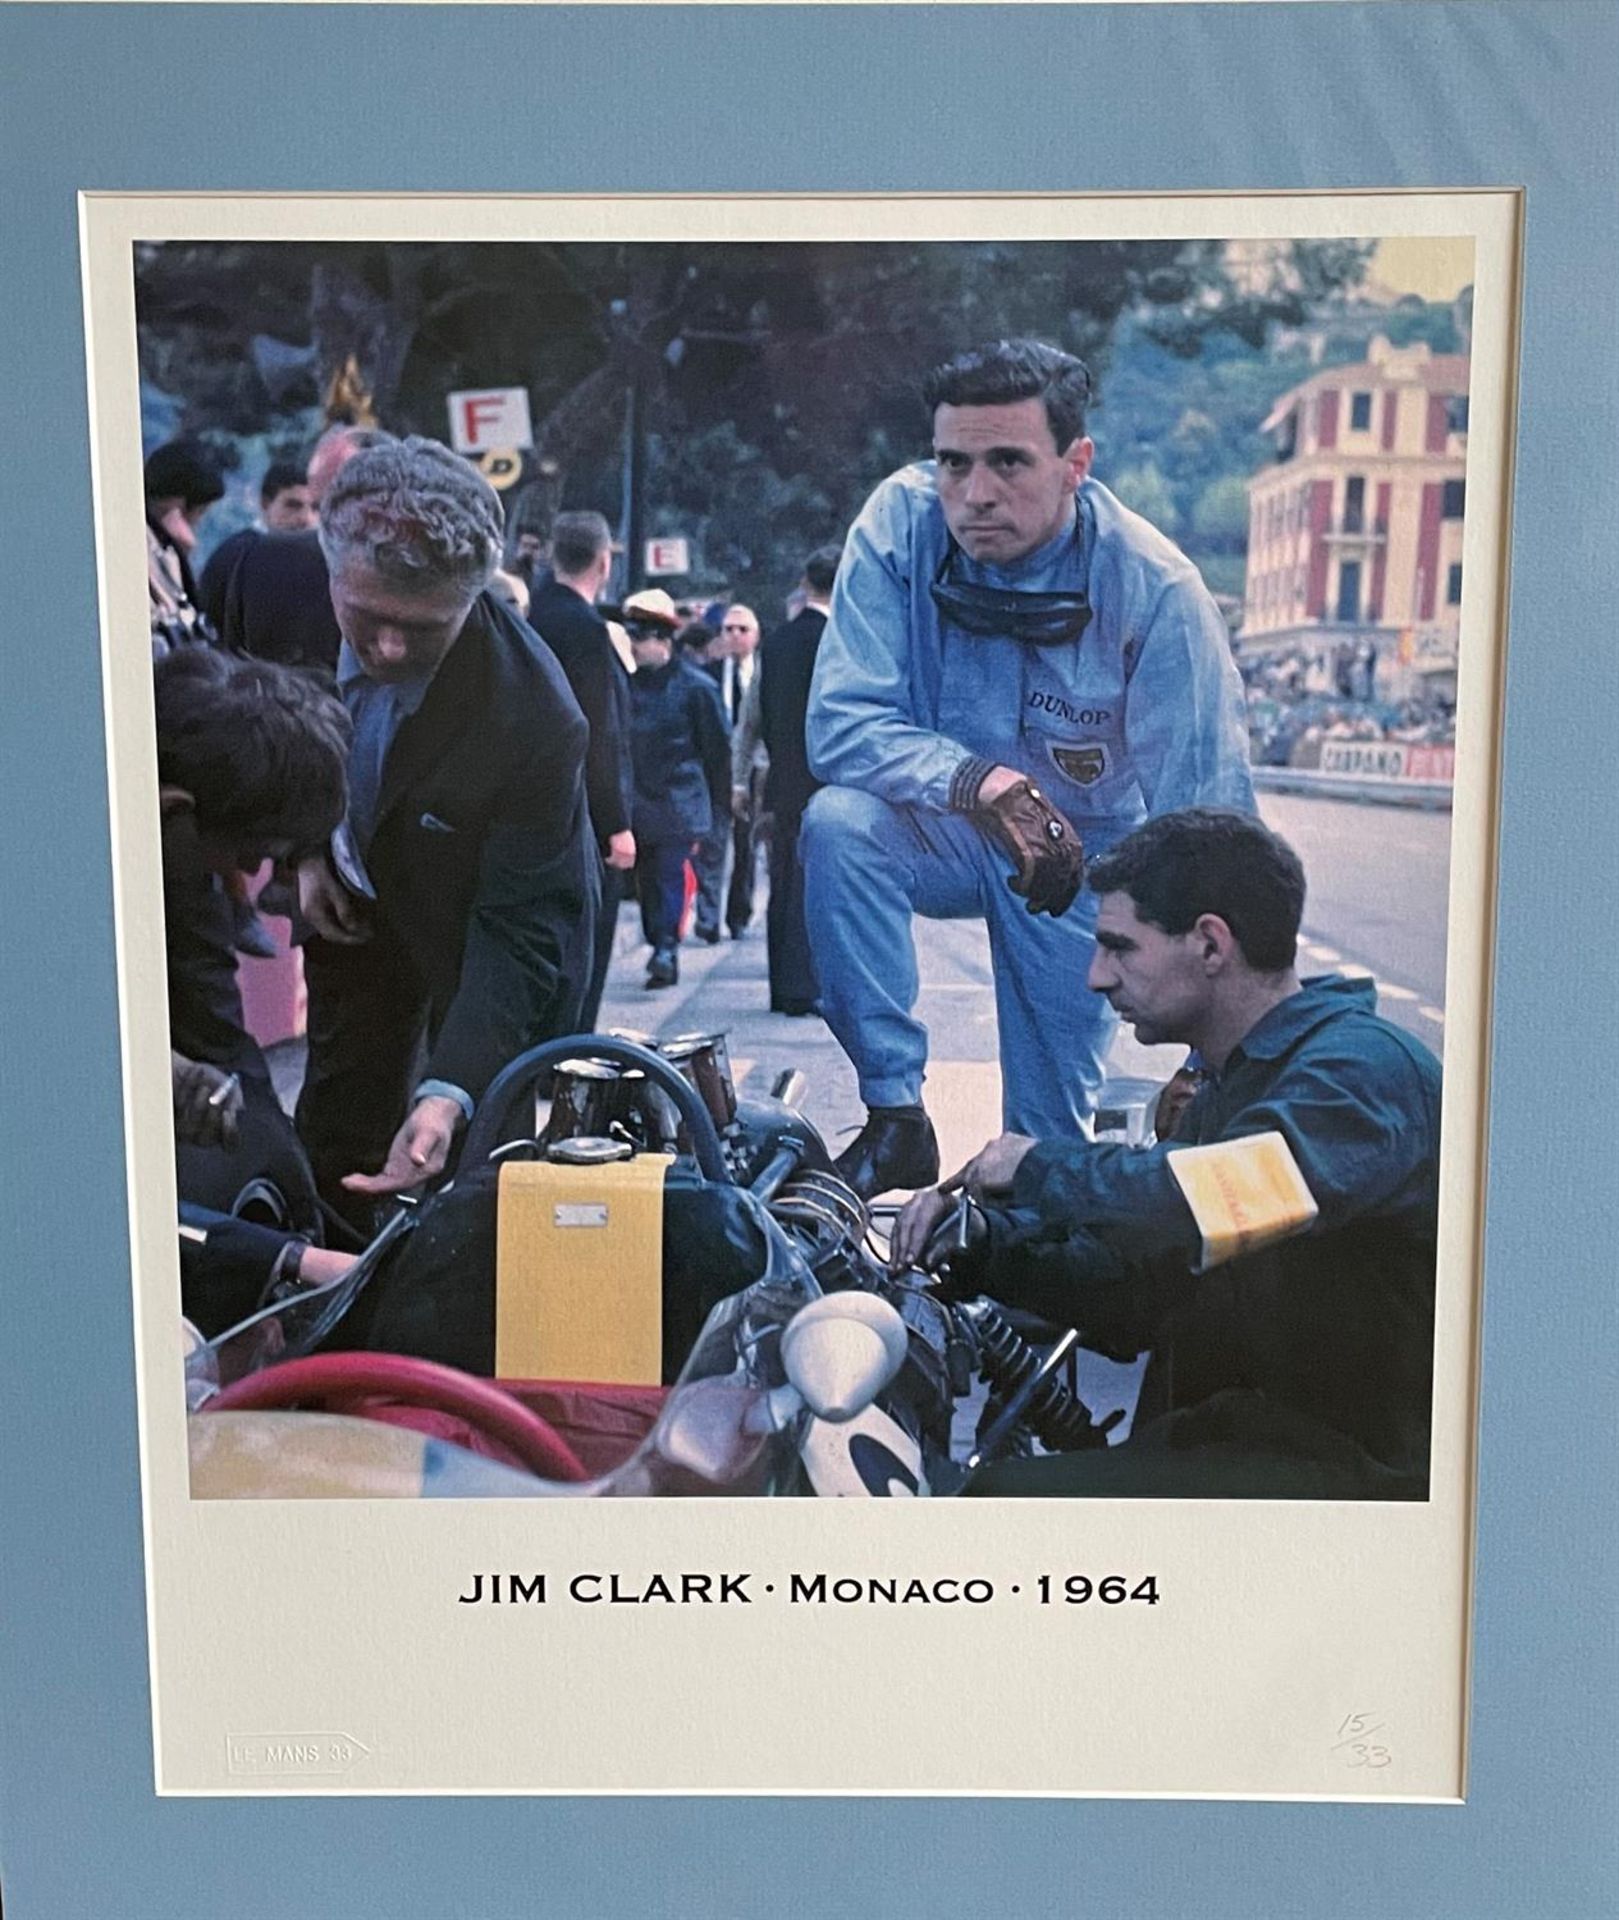 Jim Clark's 1964 Lotus-Climax Framed Photo